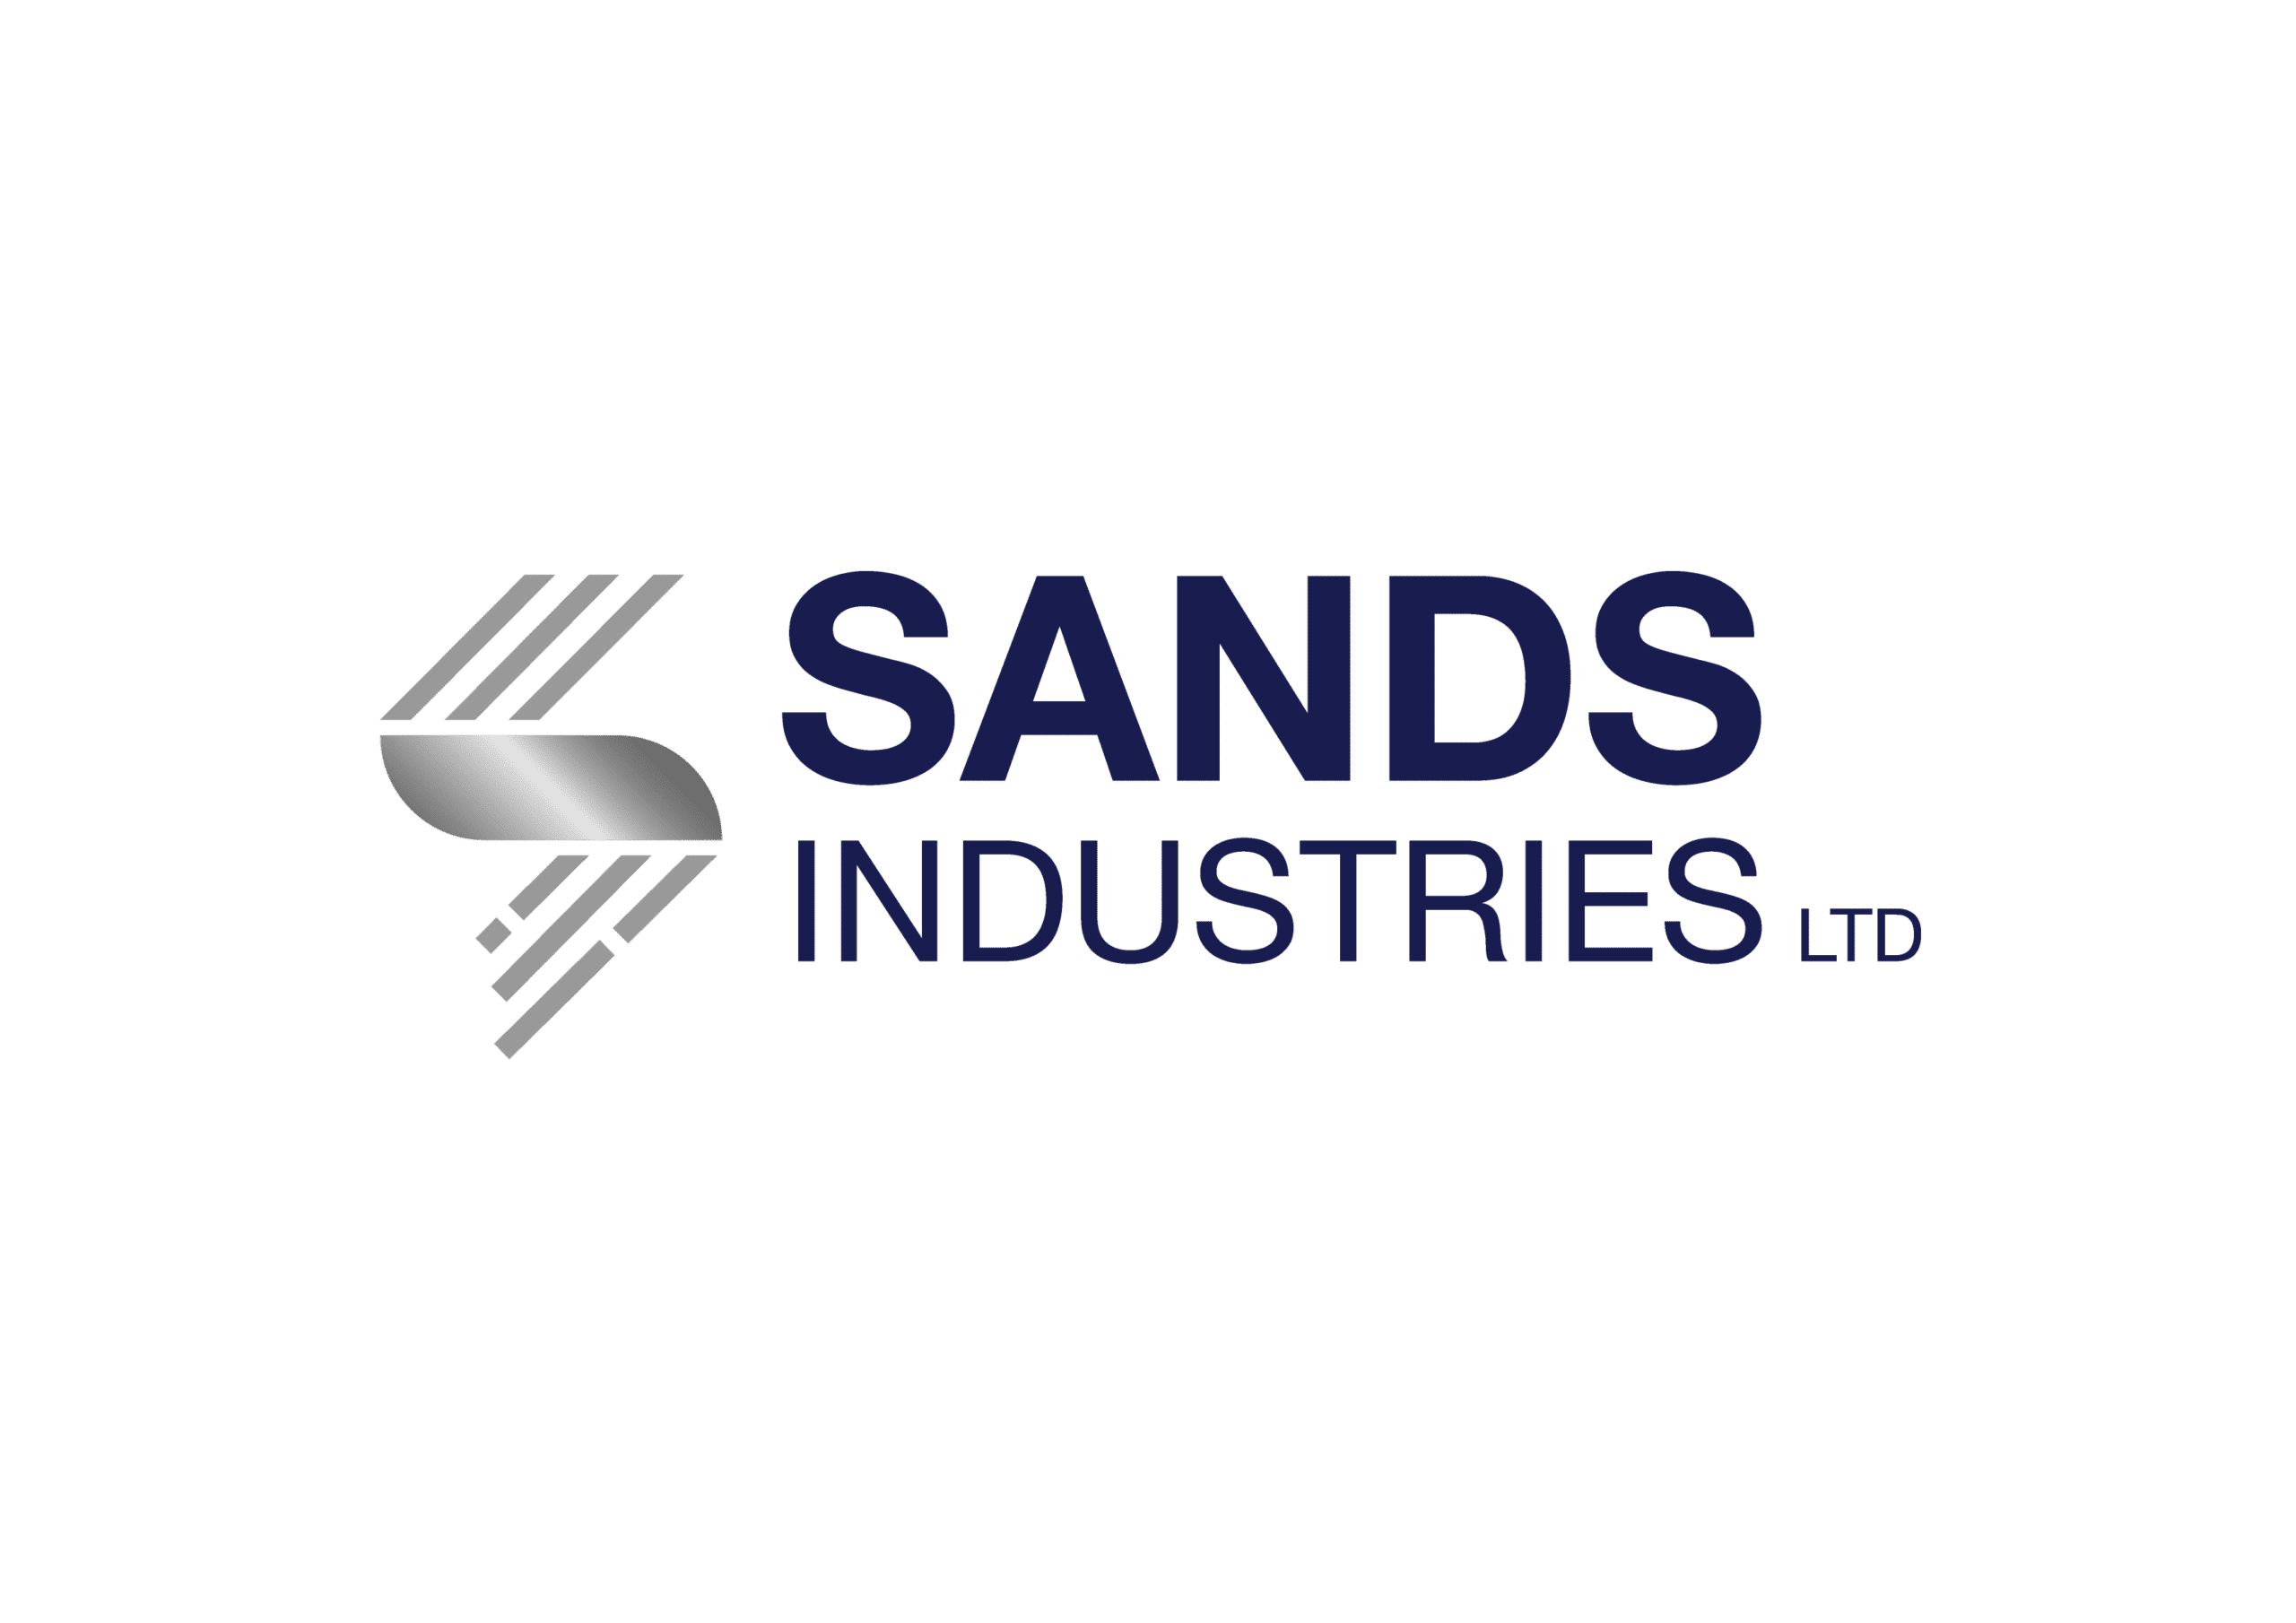 Sands Industries logo